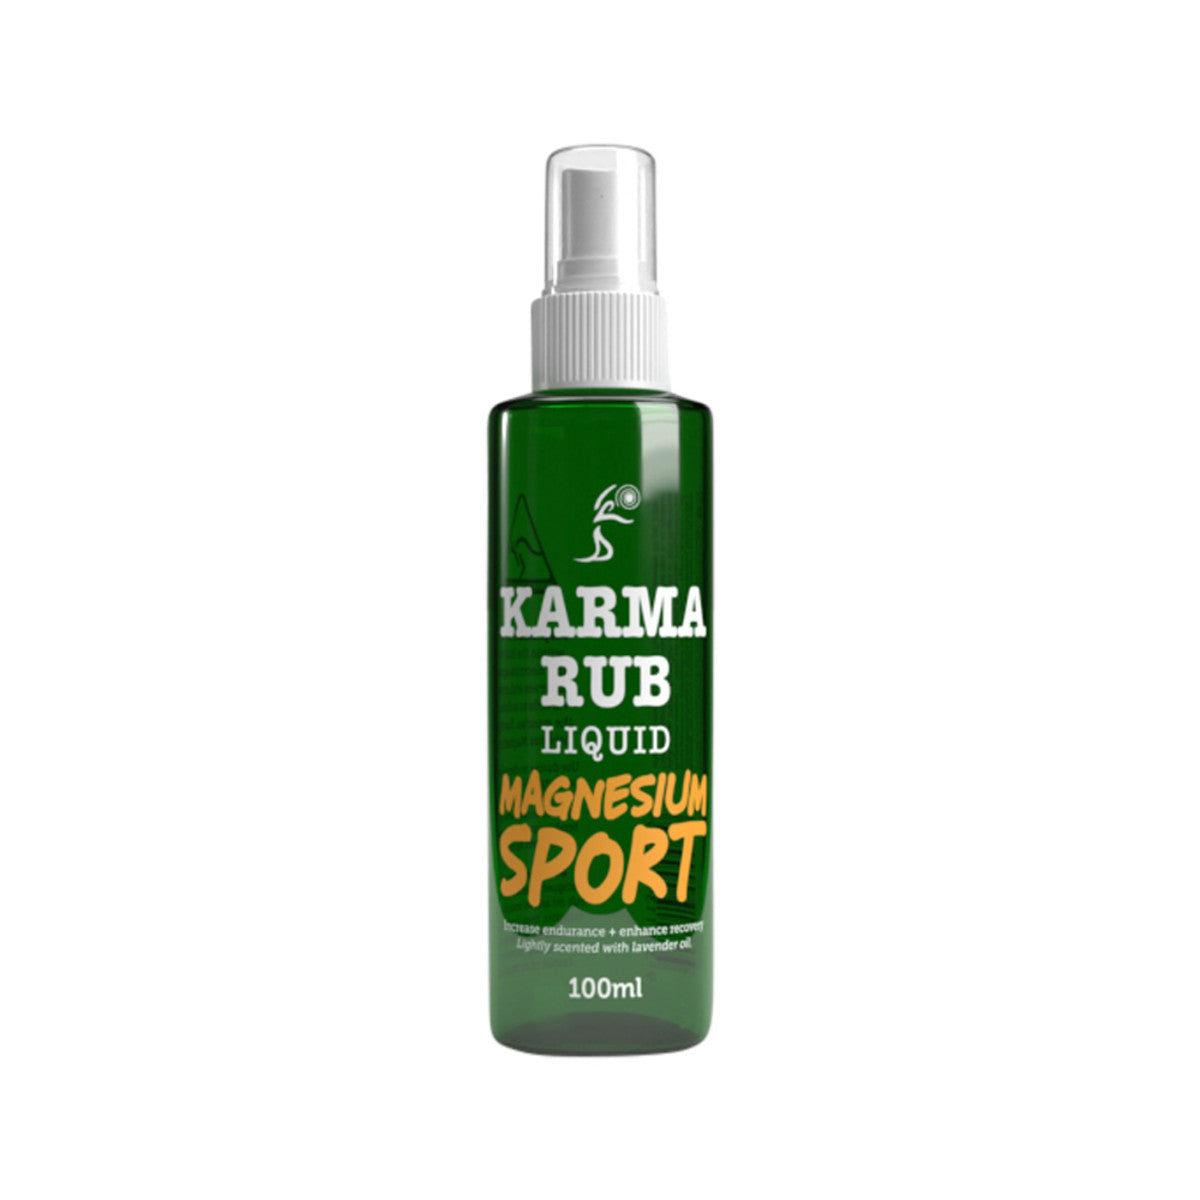 Karma Rub - Liquid Magnesium Sport Spray